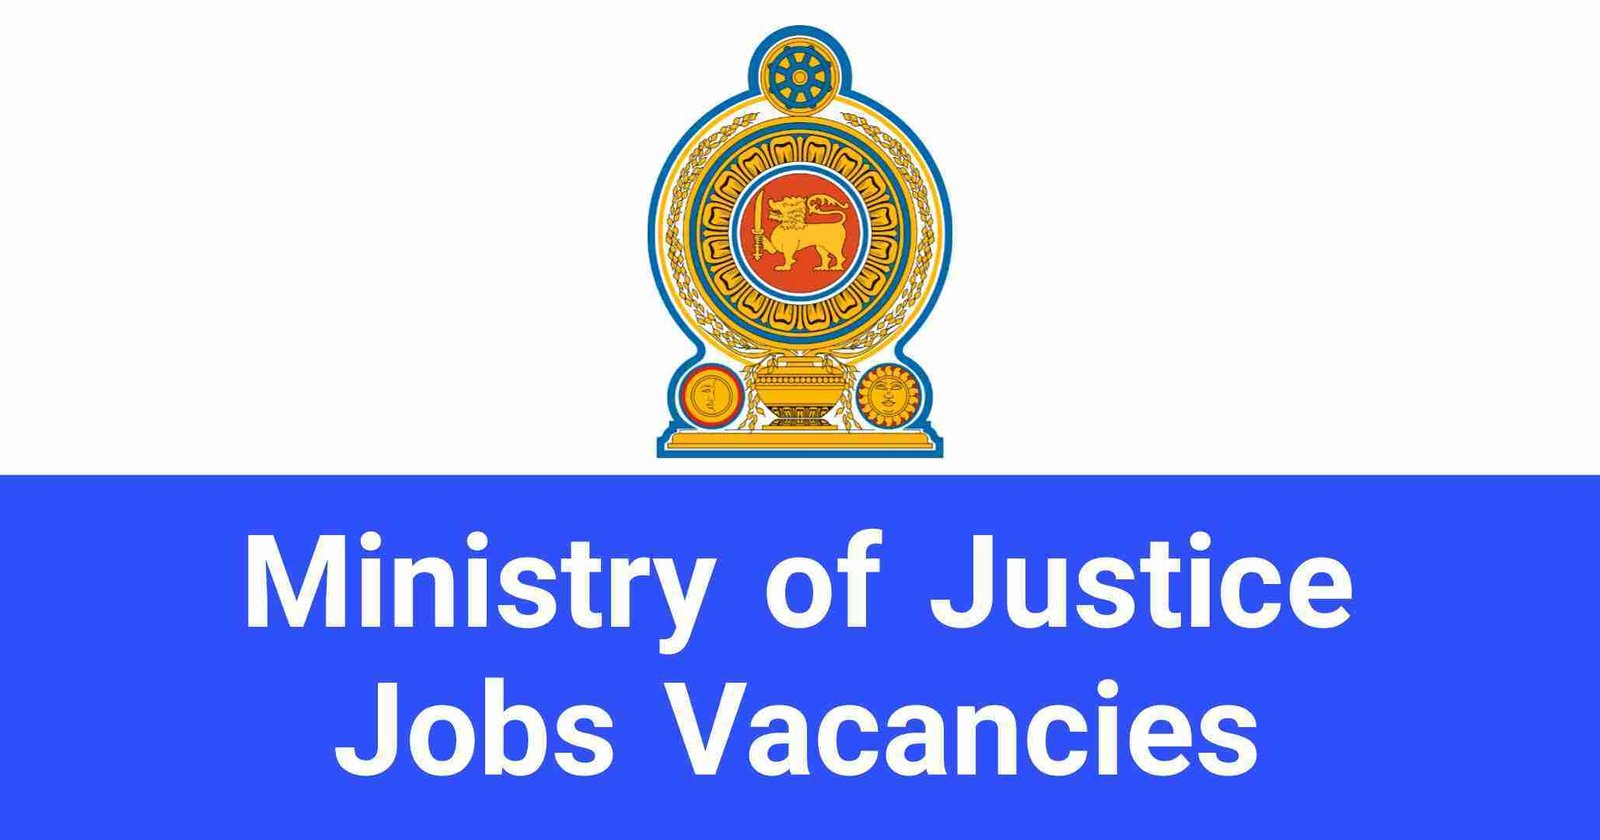 Ministry of Justice Jobs Vacancies